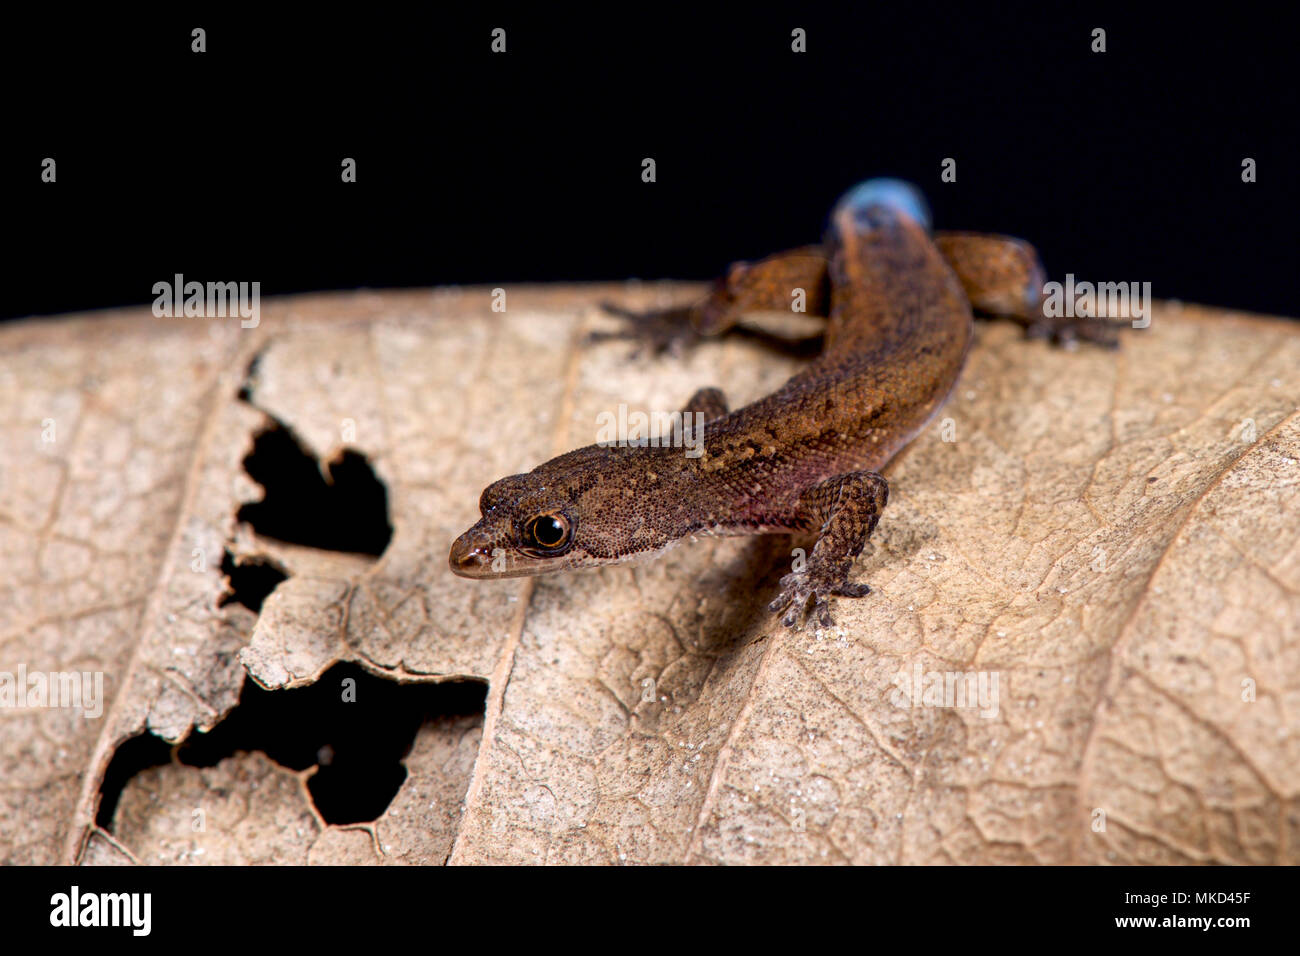 Pigmeo brasileño gecko (Chatogekko amazonicus) Foto de stock